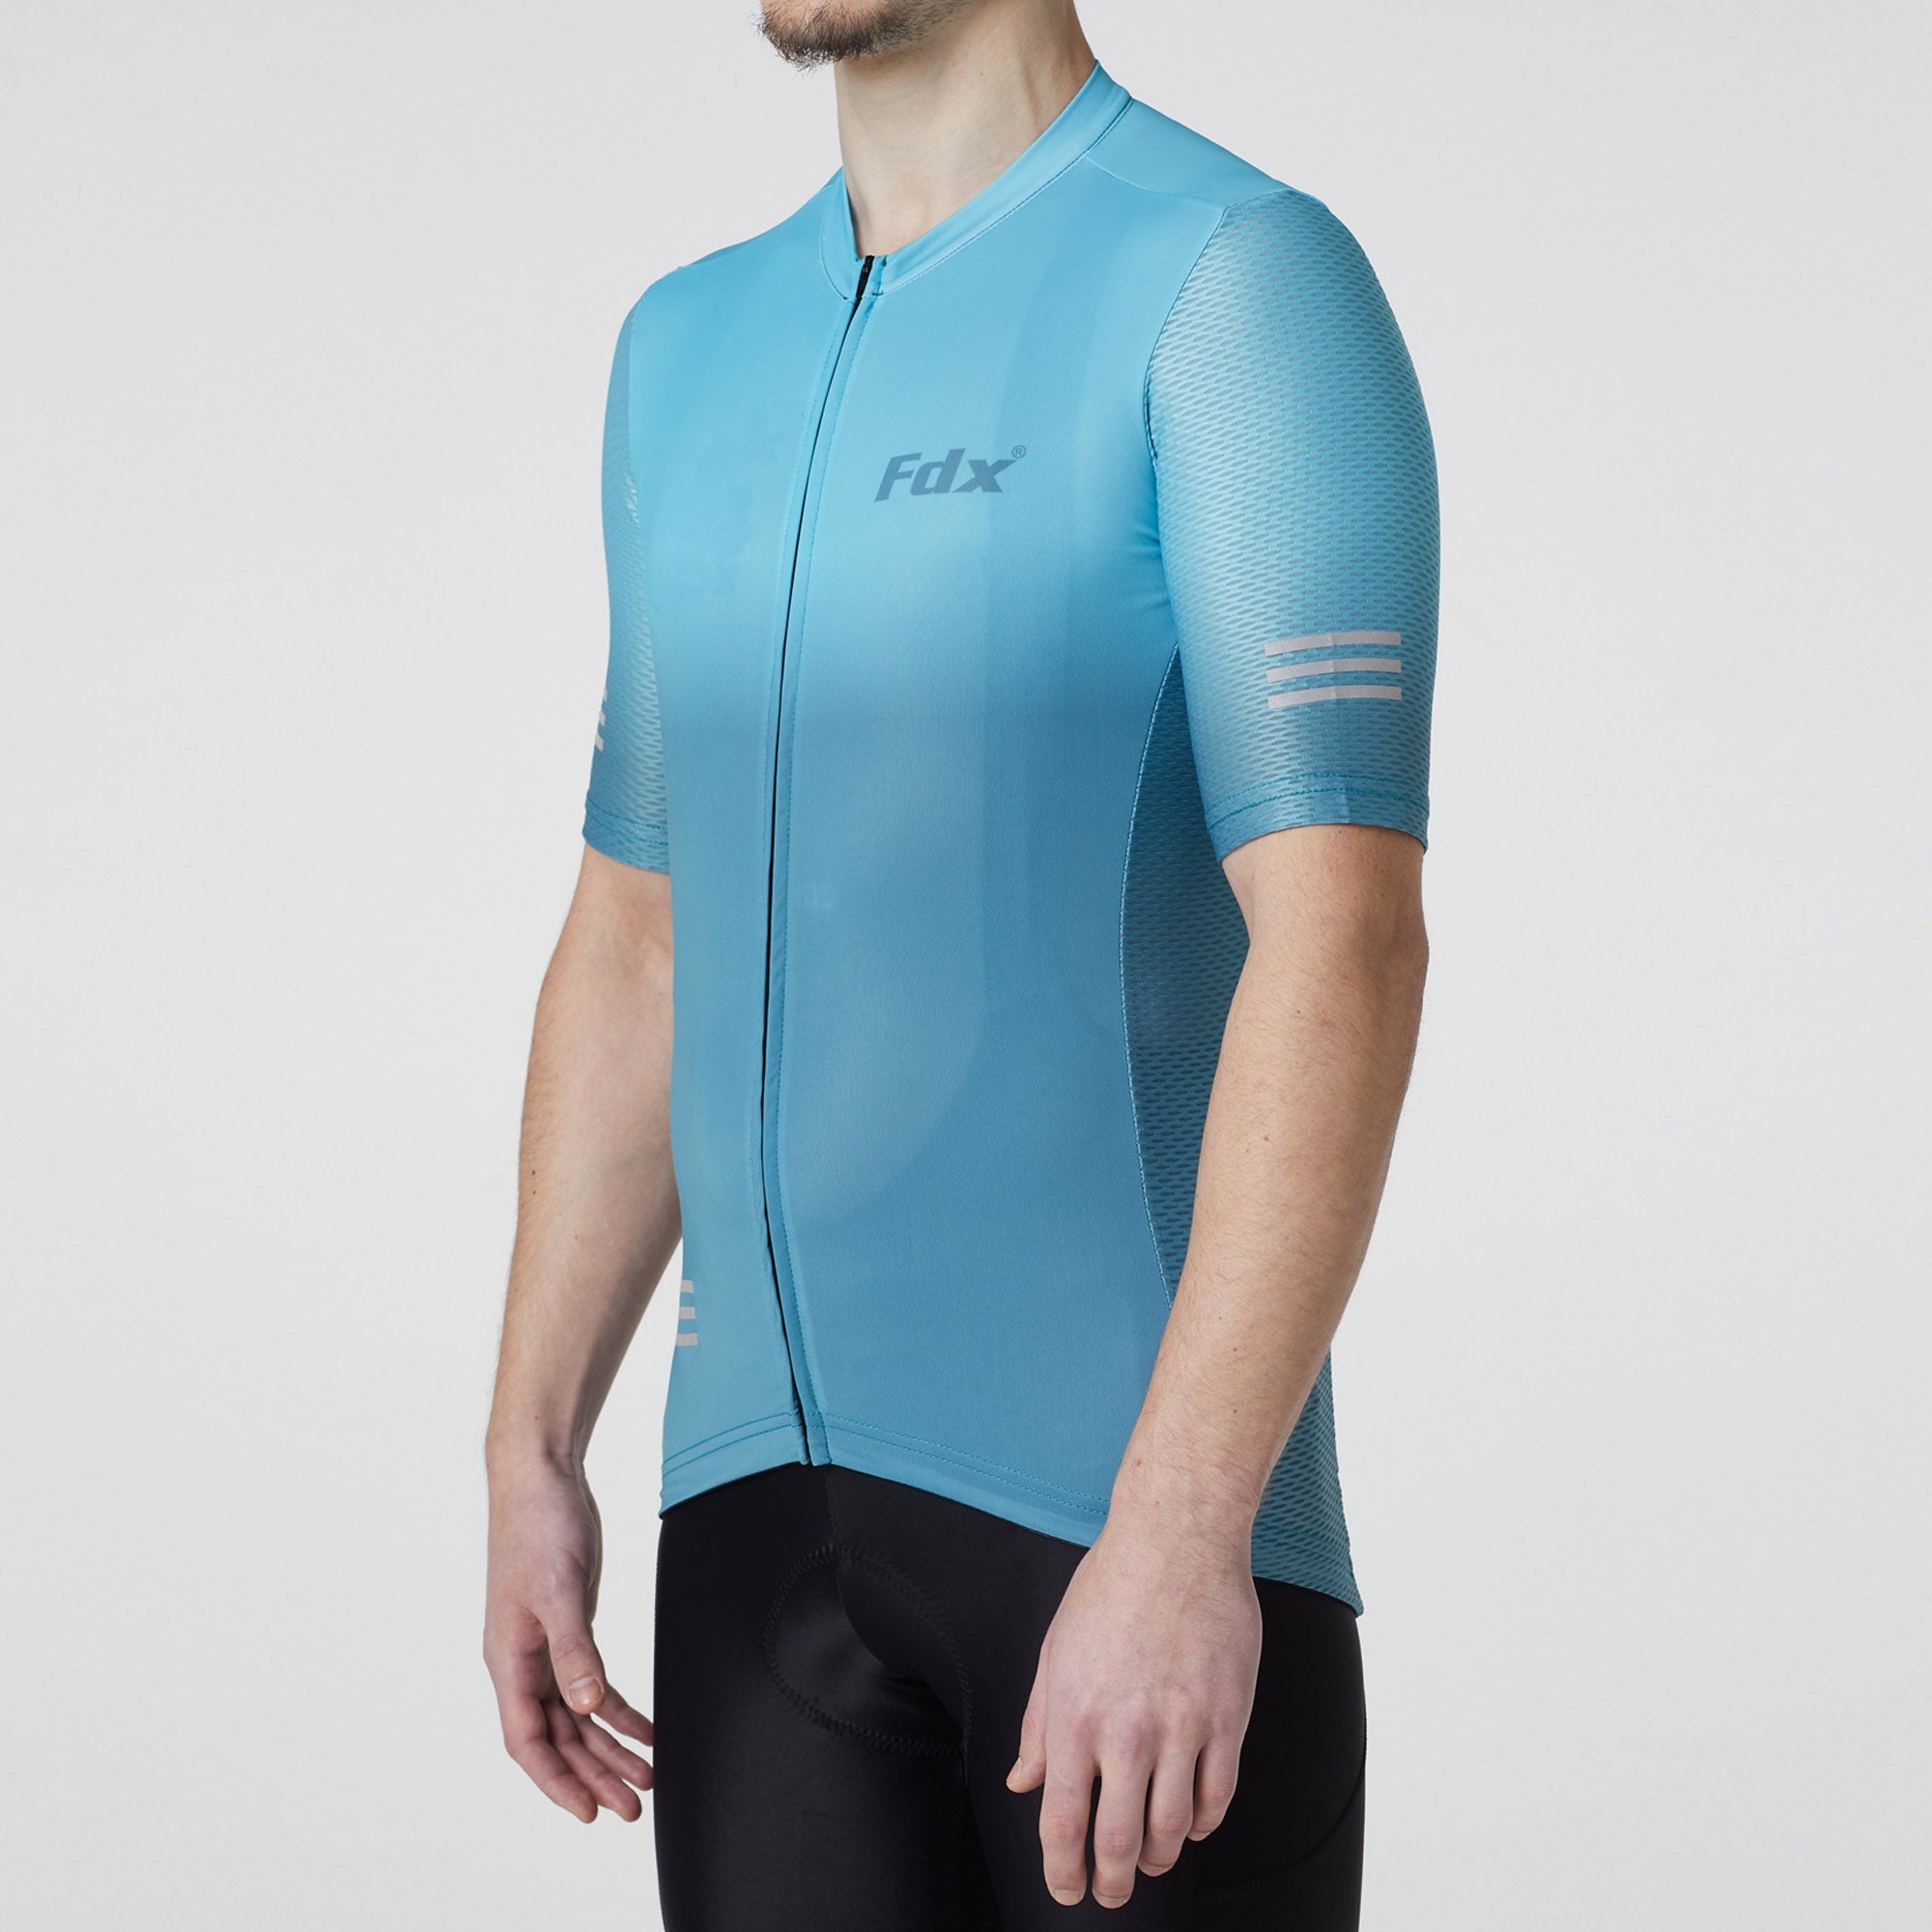 Buy Fdx Men's Short Sleeve Summer Cycling Jerseys | FDX Sports®